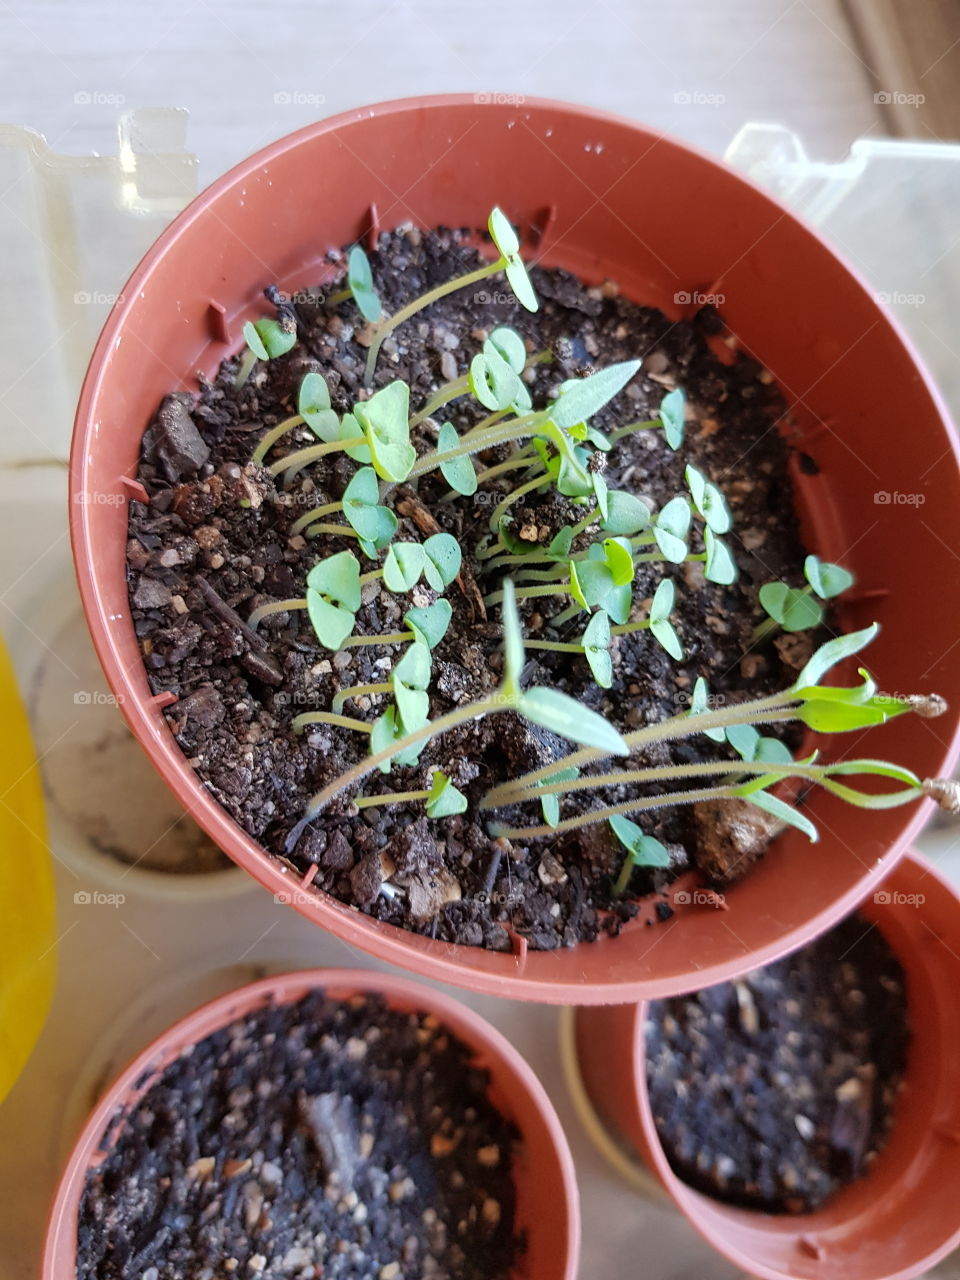 growing plants